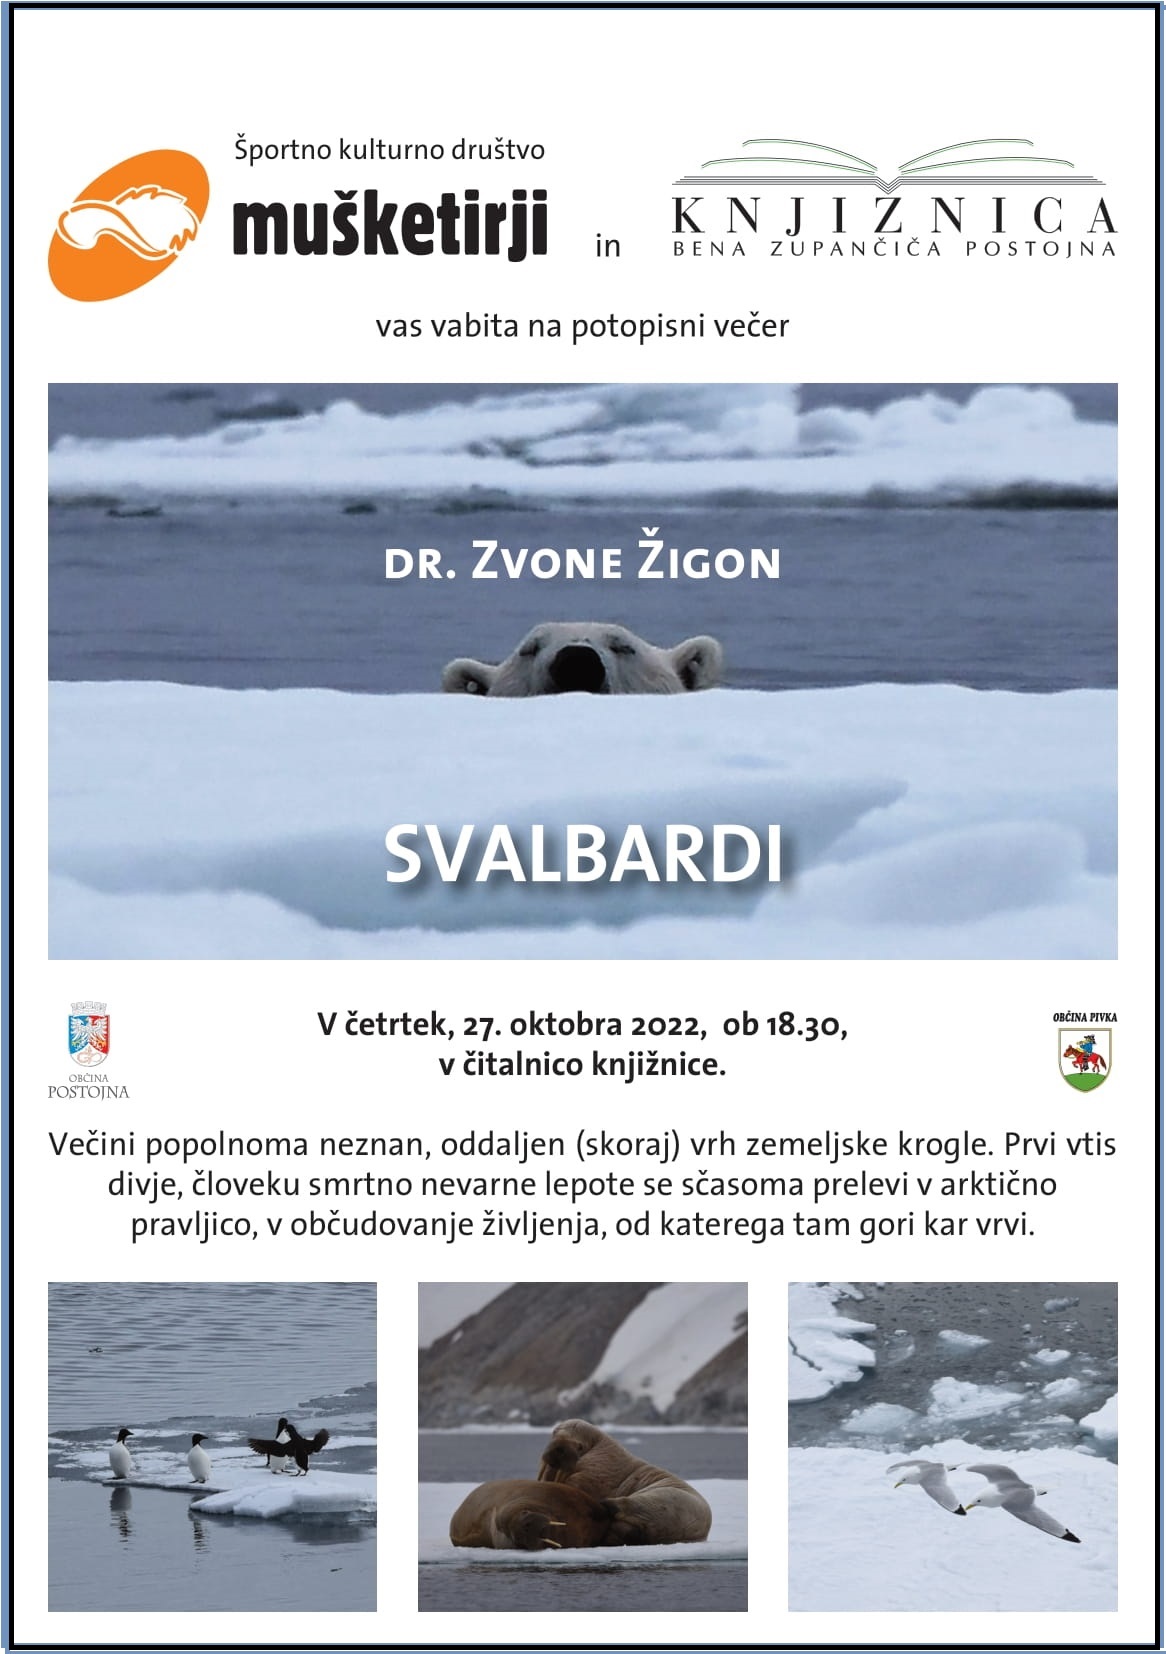 Svalbardi e-vabilo-1